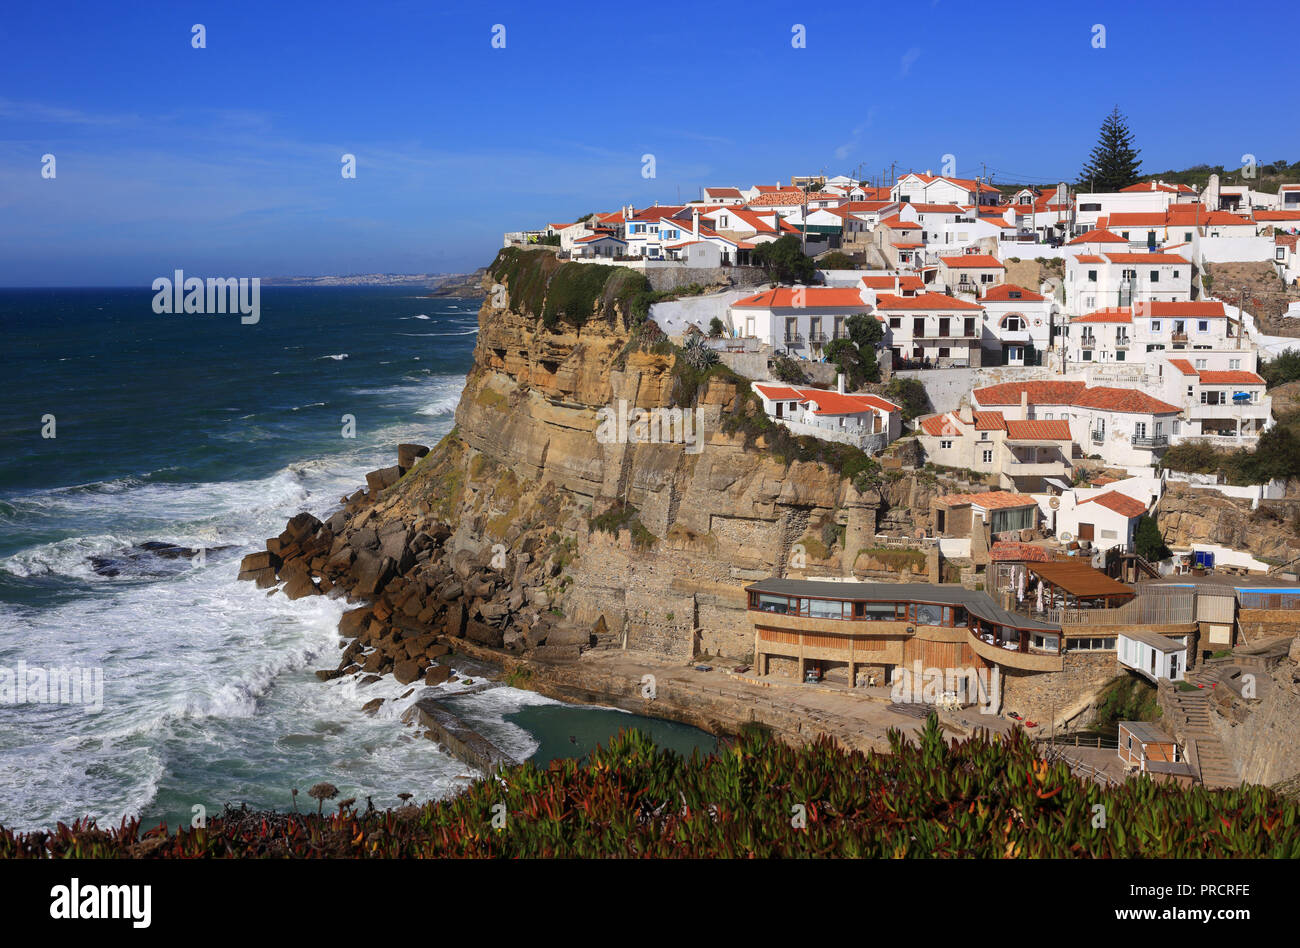 Portugal, Azenhas do Mar, Colares, Sintra near Lisbon. Village built on a  cliff-top overlooking the Atlantic Ocean and beach below Stock Photo - Alamy